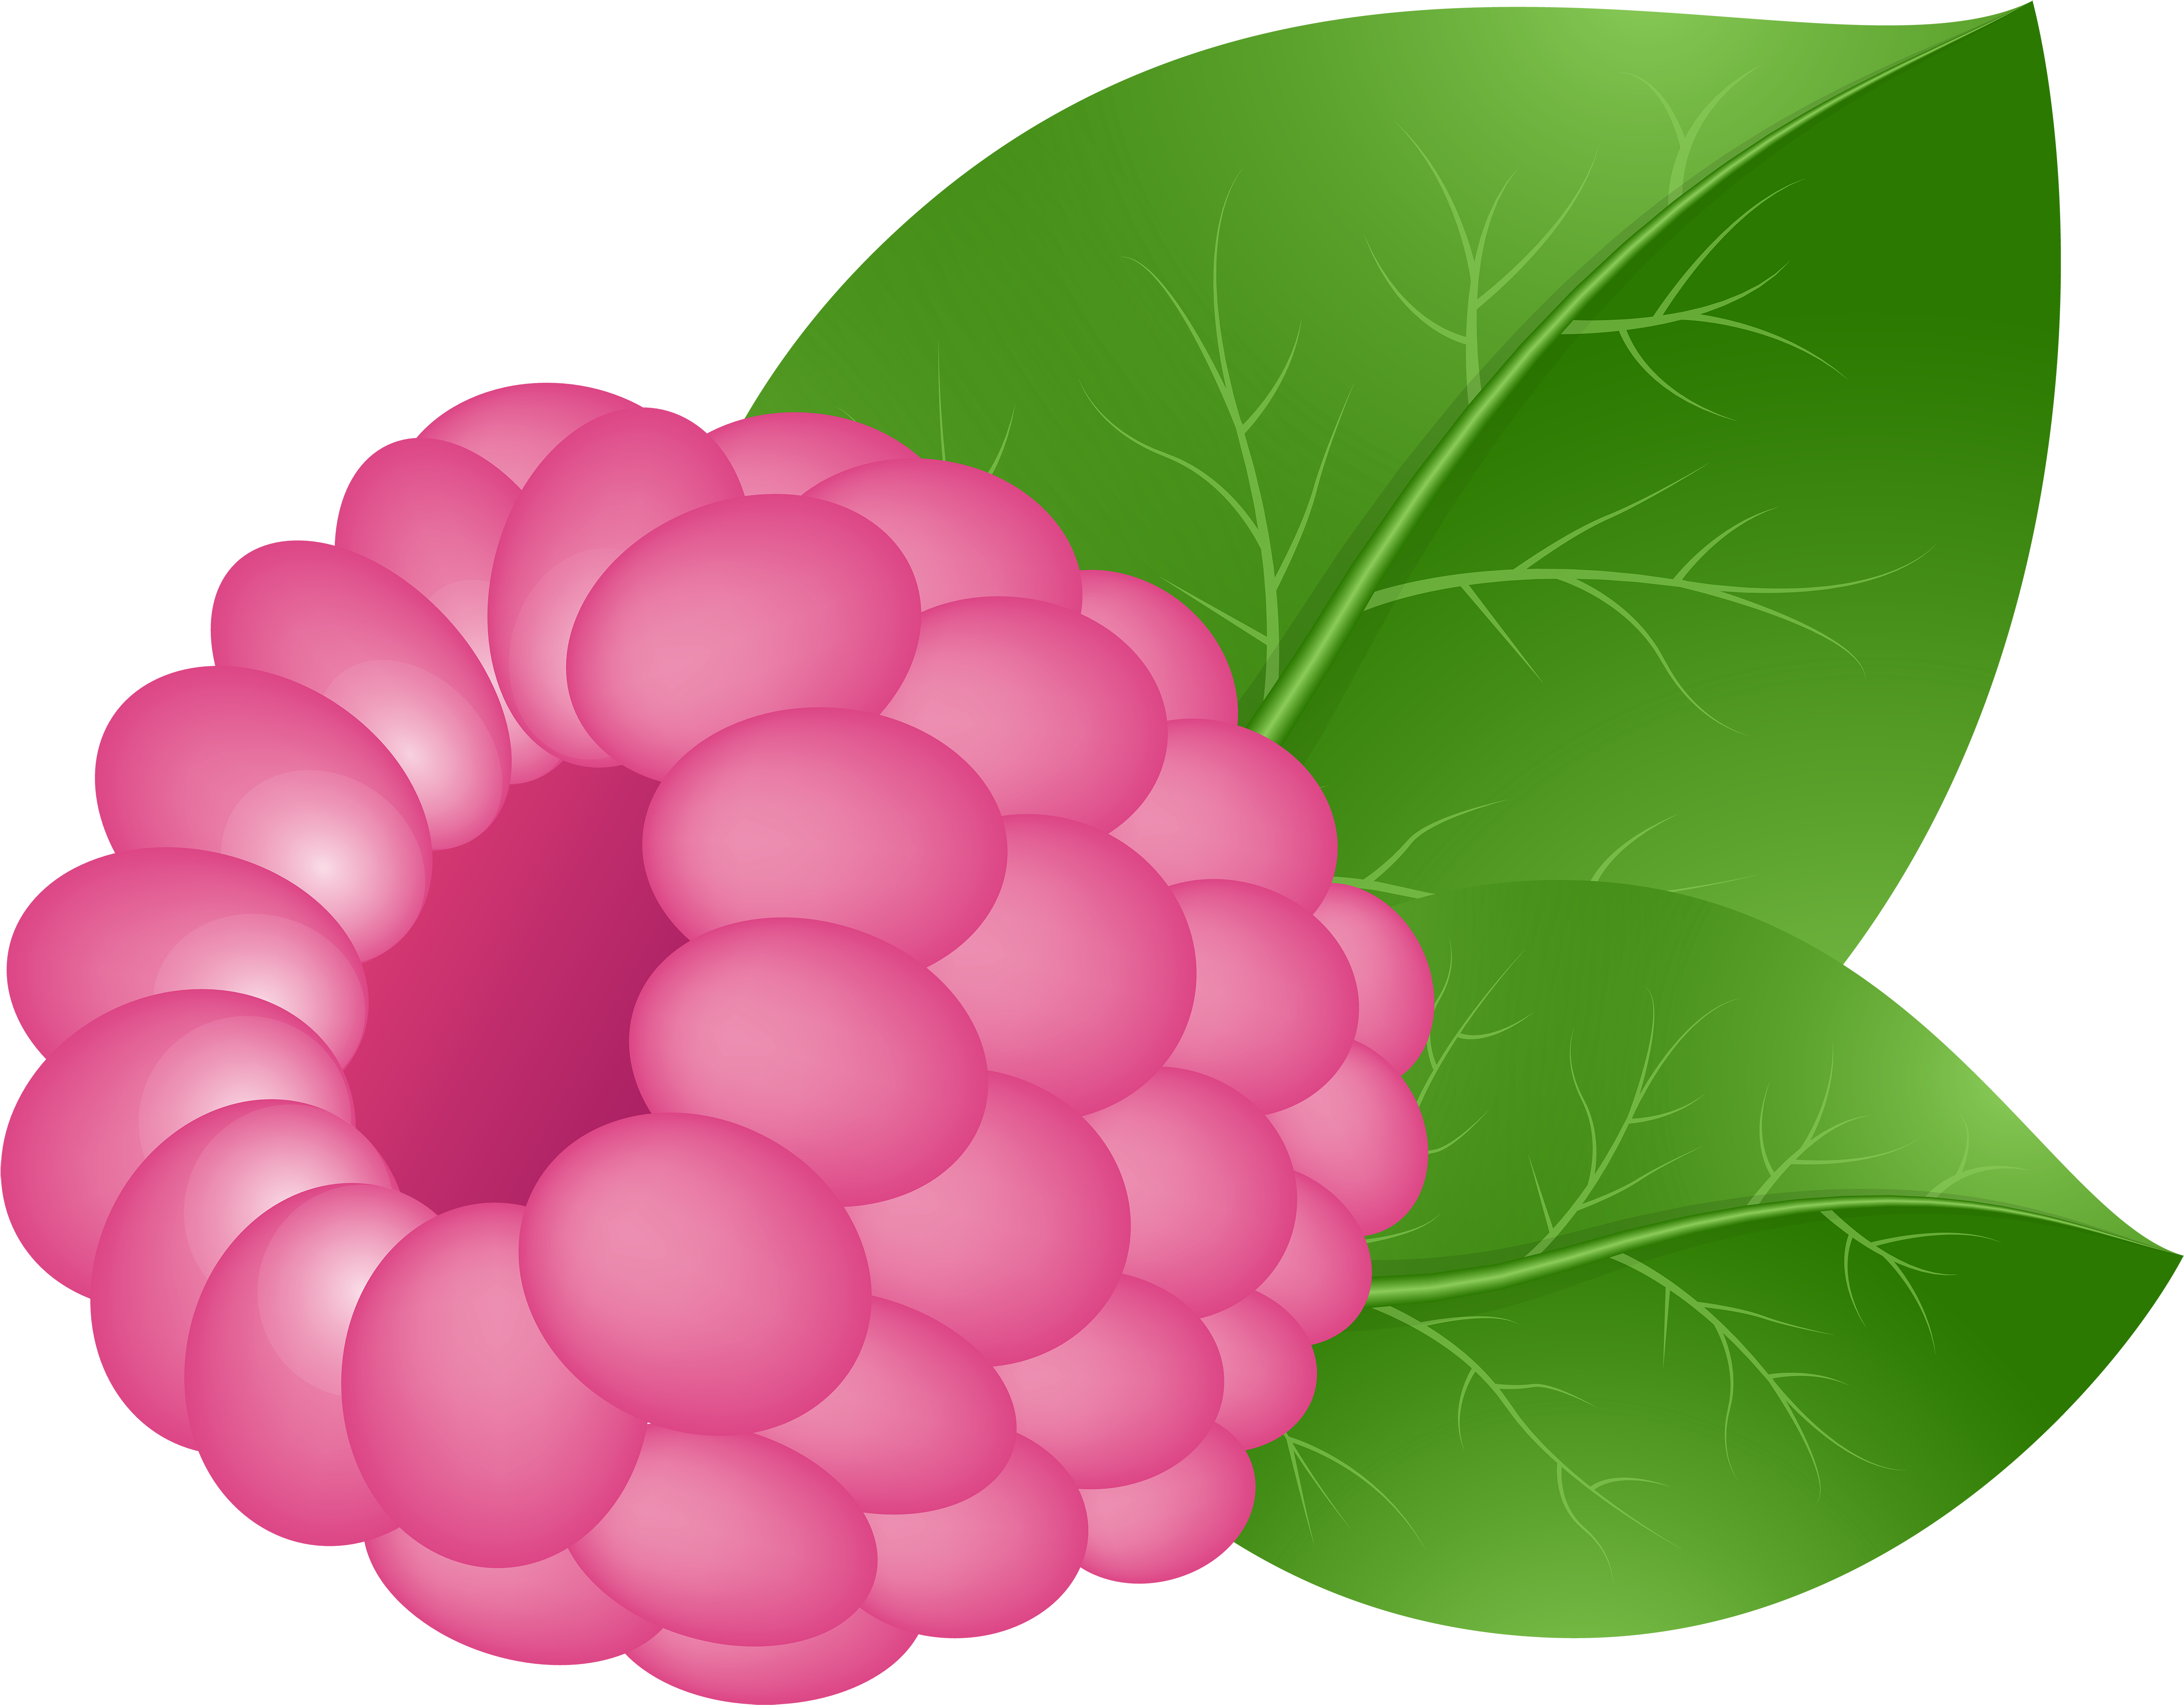 Vector Illustrationof Raspberry